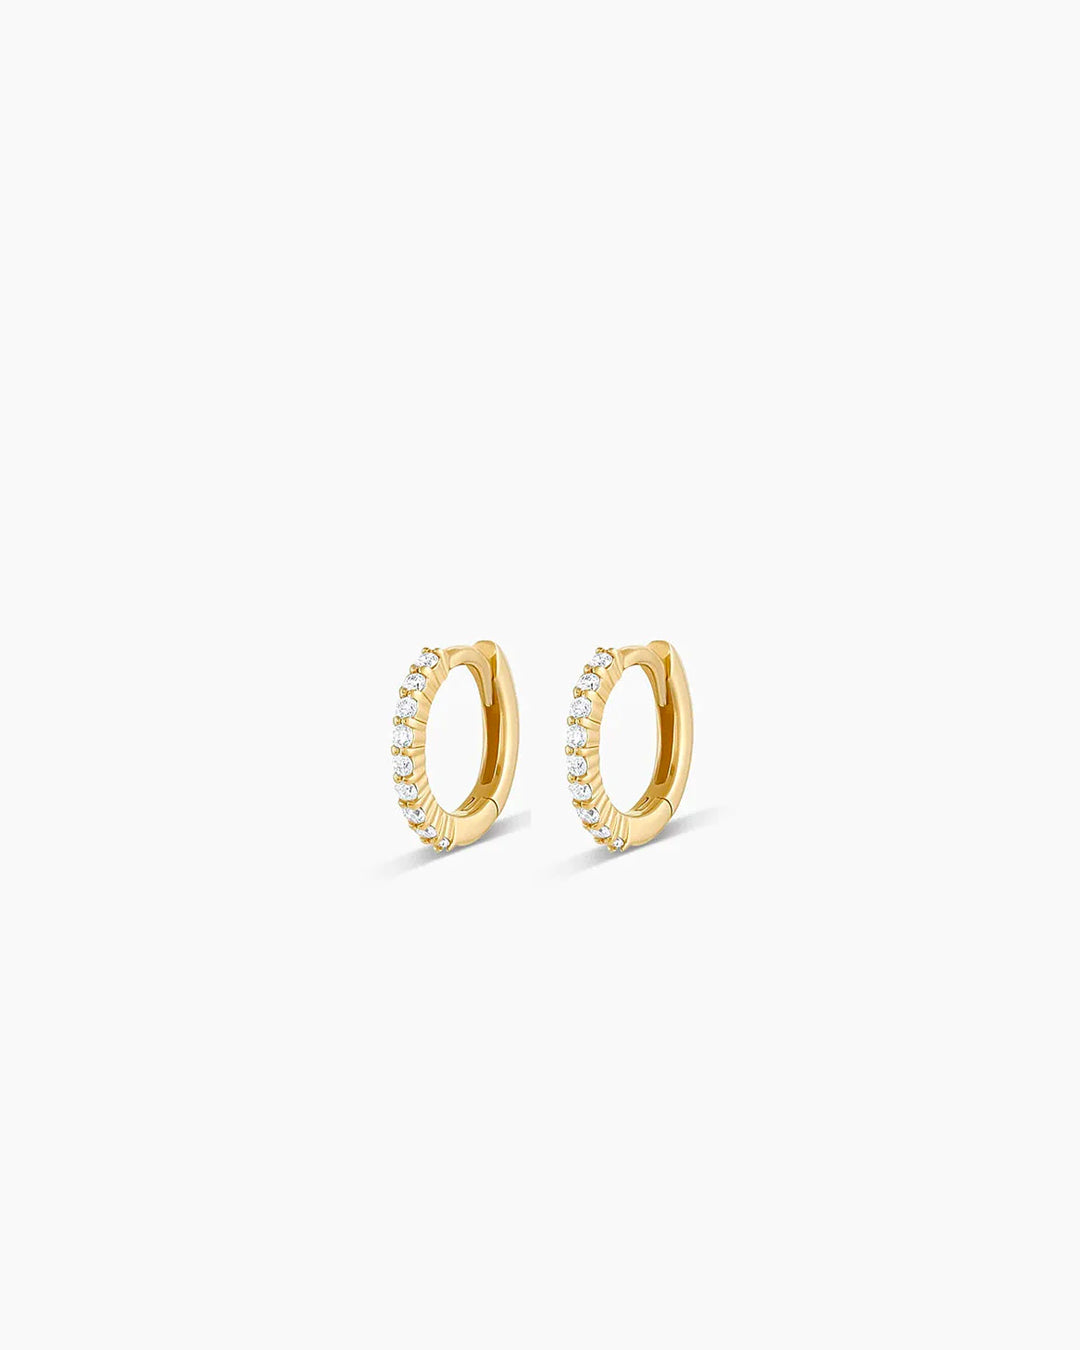 Diamond Pavé Bar Flat Back Studs Earring in 14K Solid Gold/Pair, Women's by Gorjana